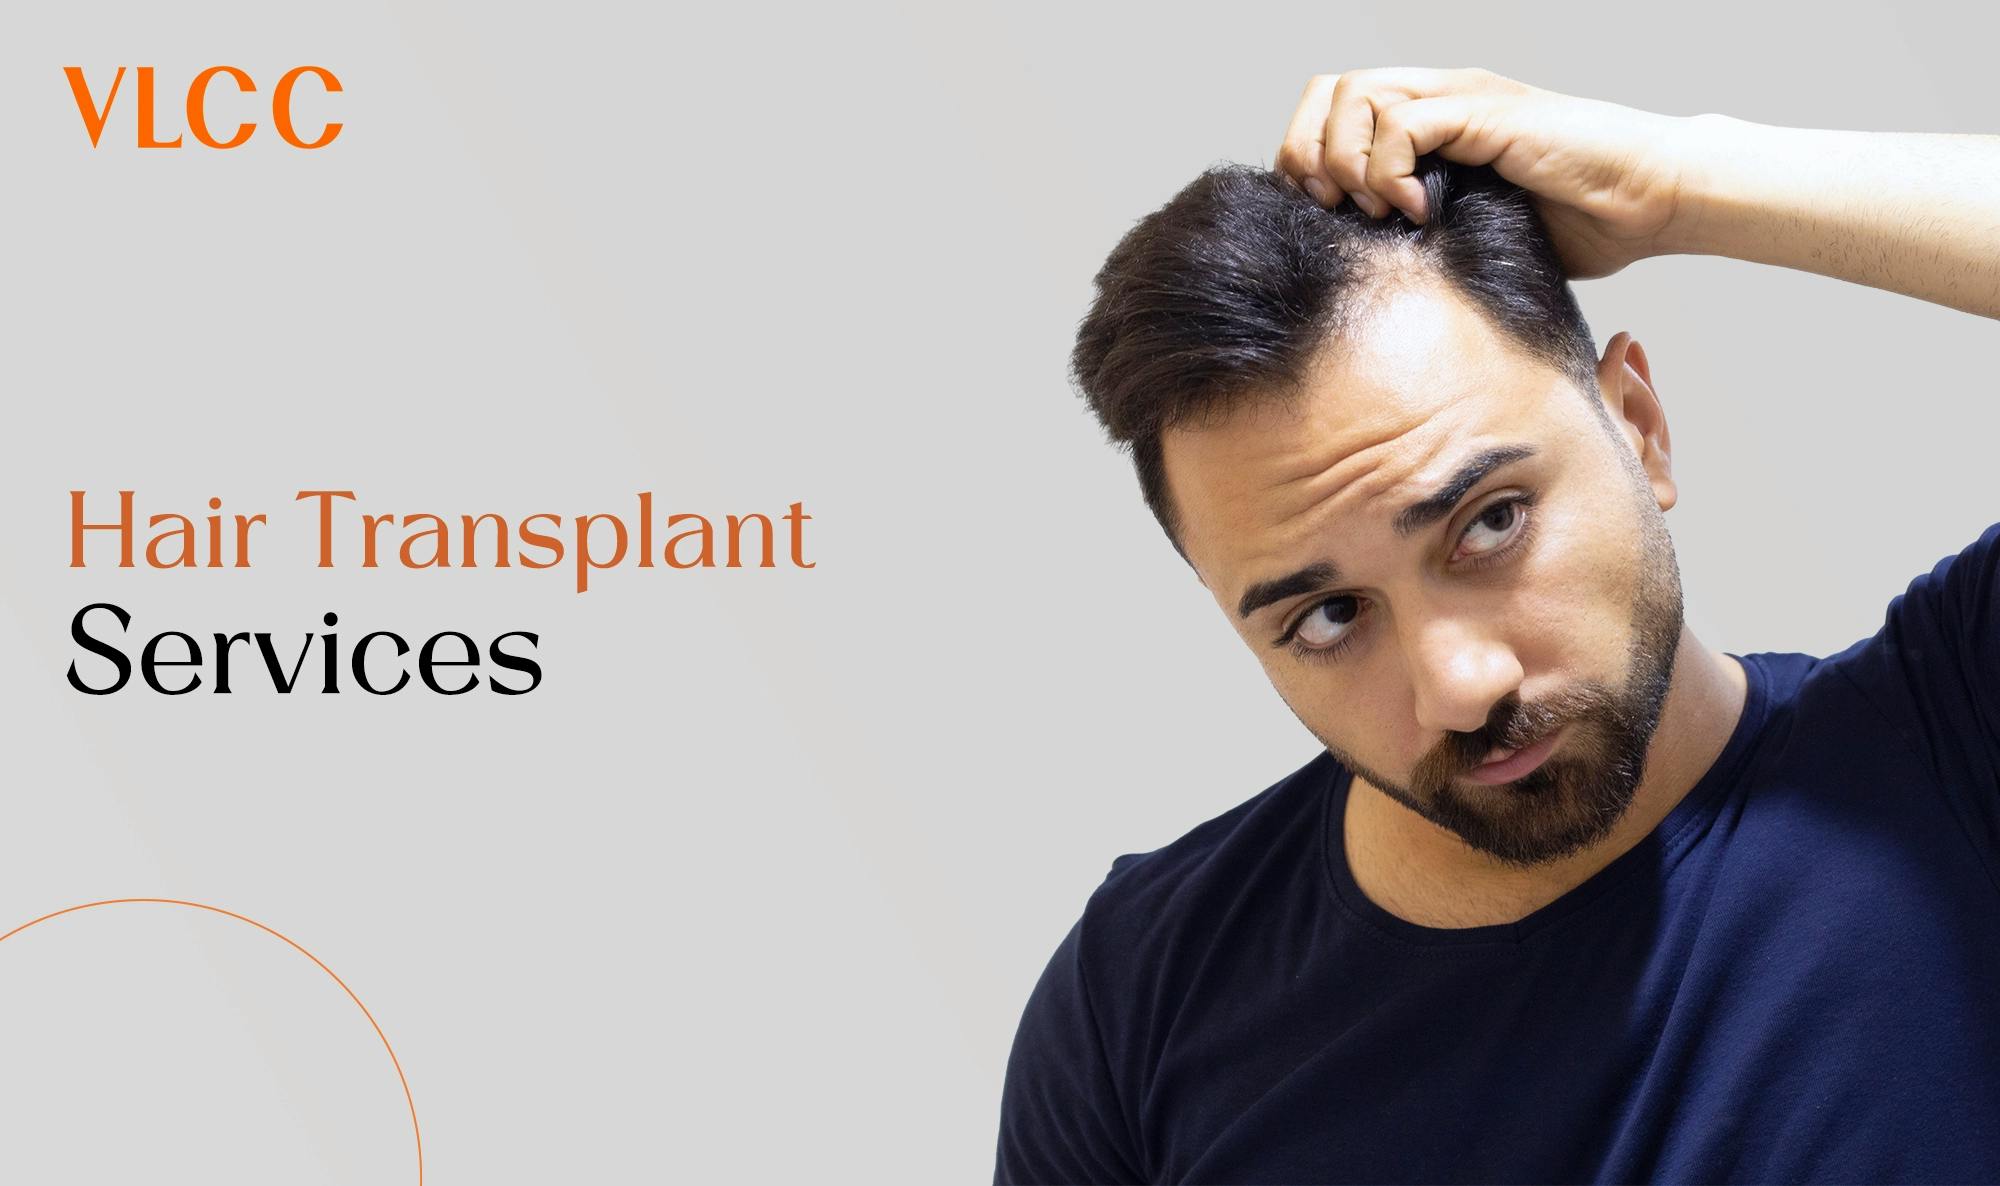 VLCC Hair Transplant Services